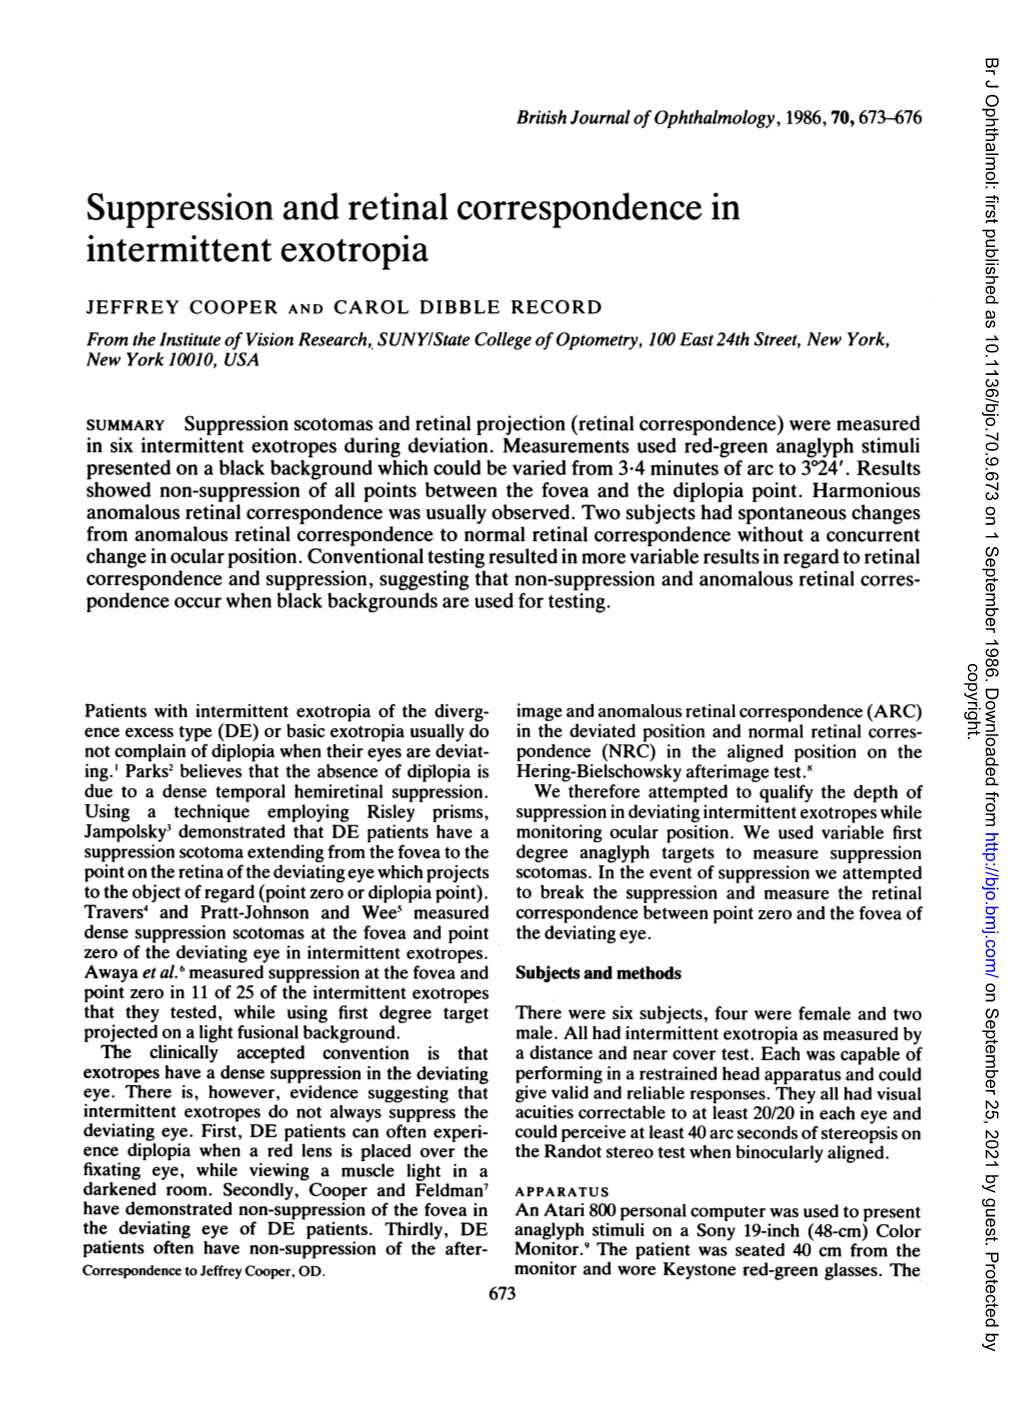 Suppression and Retinal Correspondence in Intermittent Exotropia